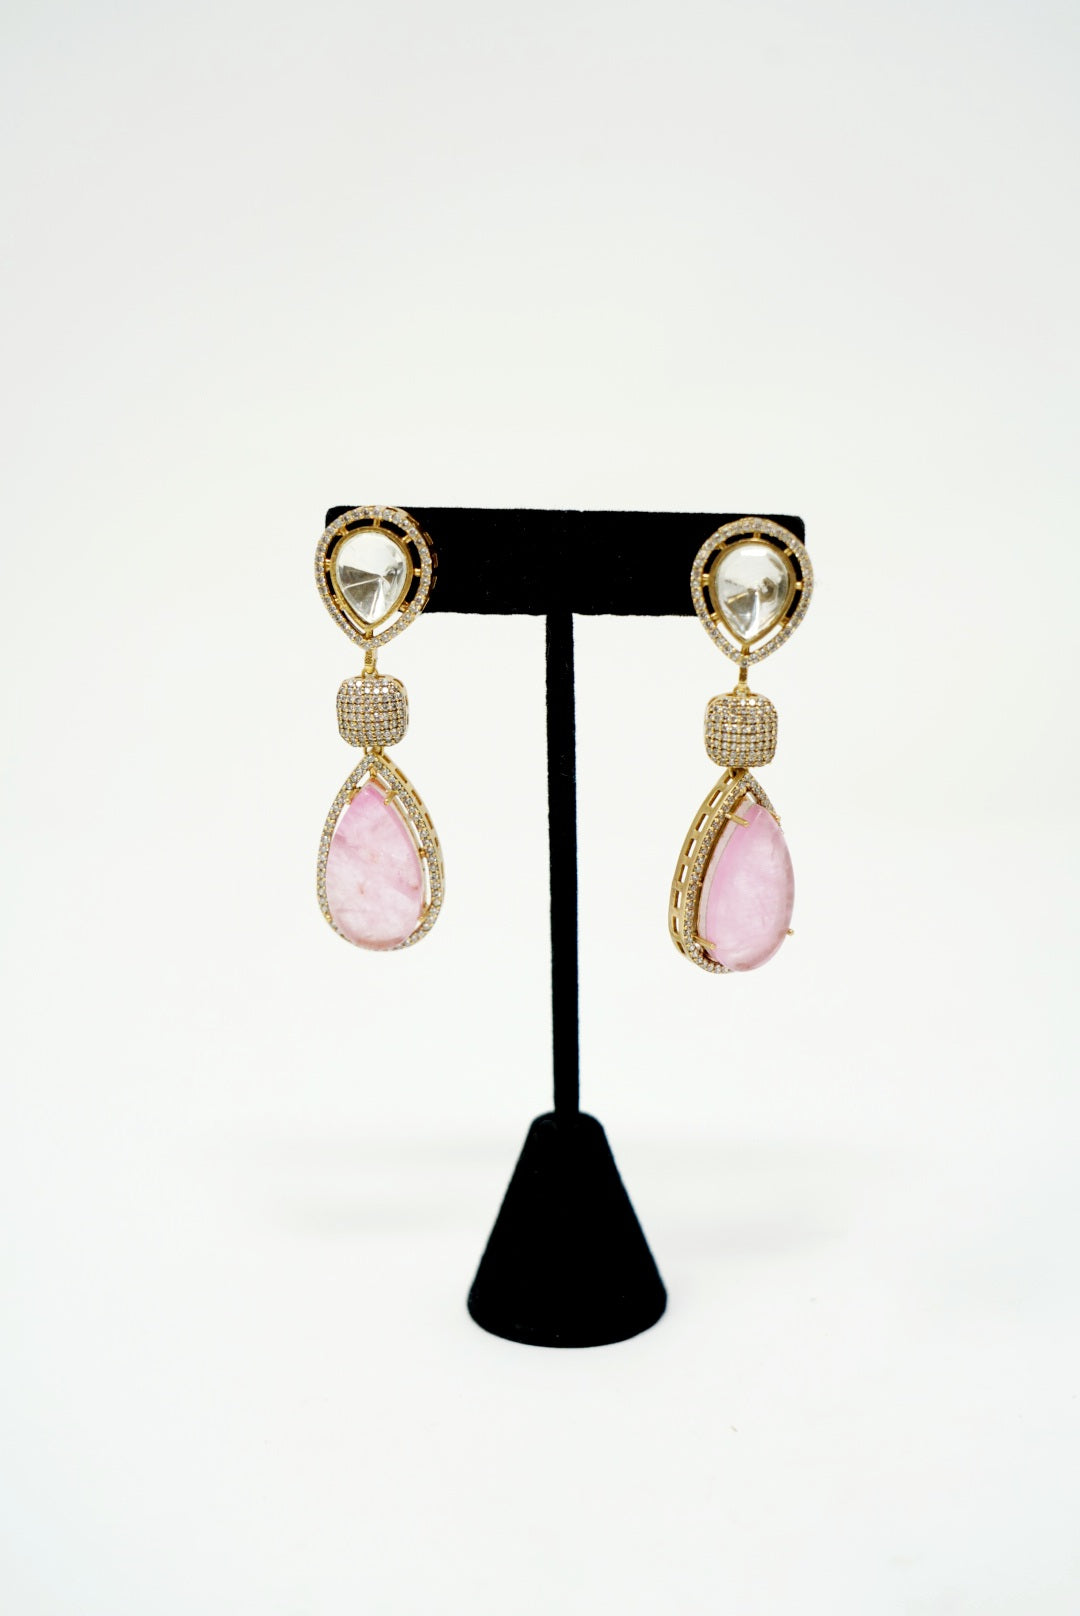 Premium Gold & Pink Toned Crystal Teardrop Shaped Earrings